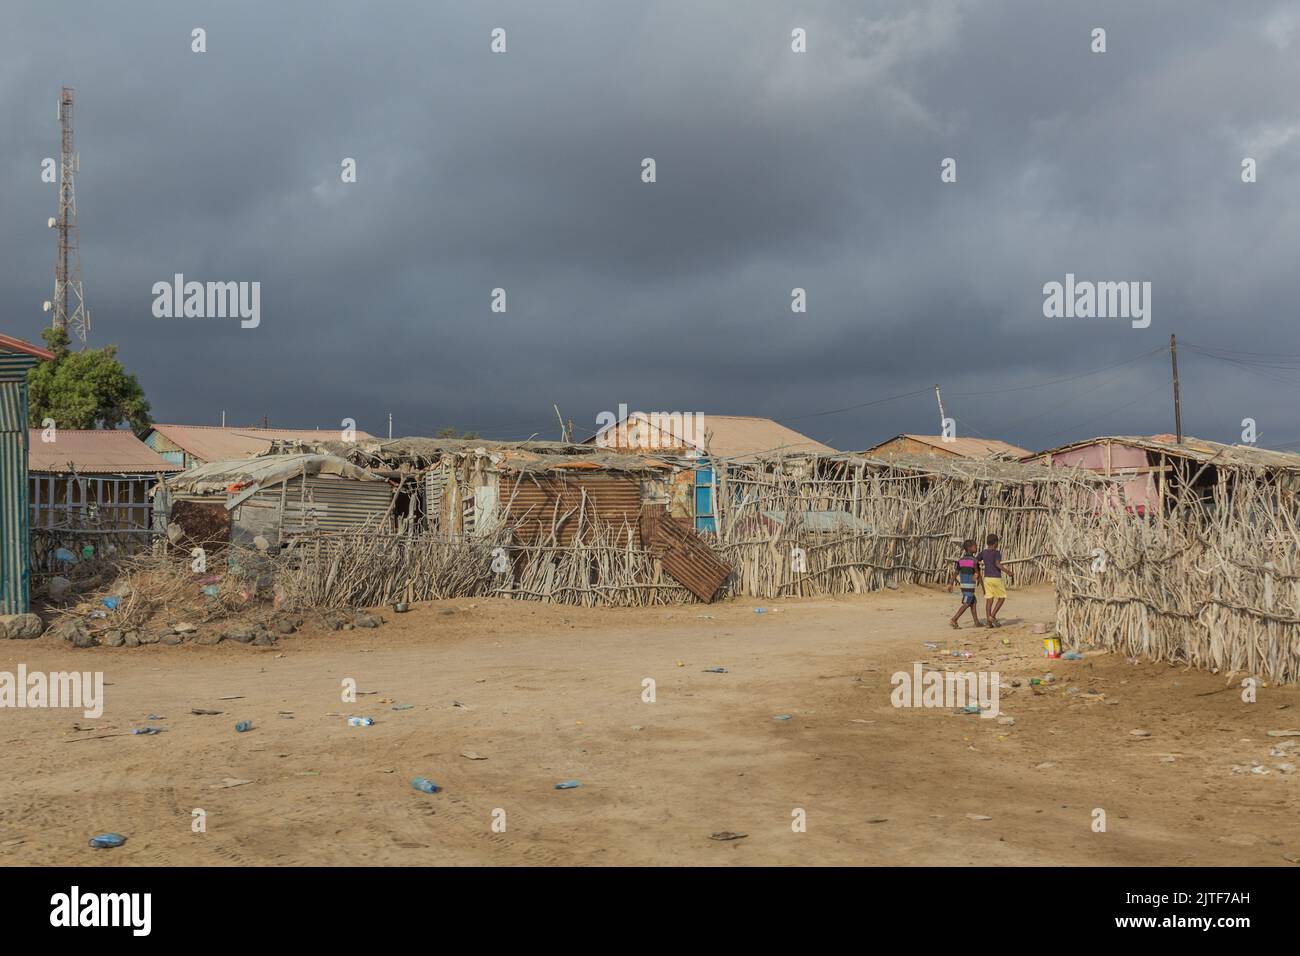 LAWYACADO, SOMALILAND - APRIL 17, 2019: View of border town Lawyacado in western Somaliland Stock Photo